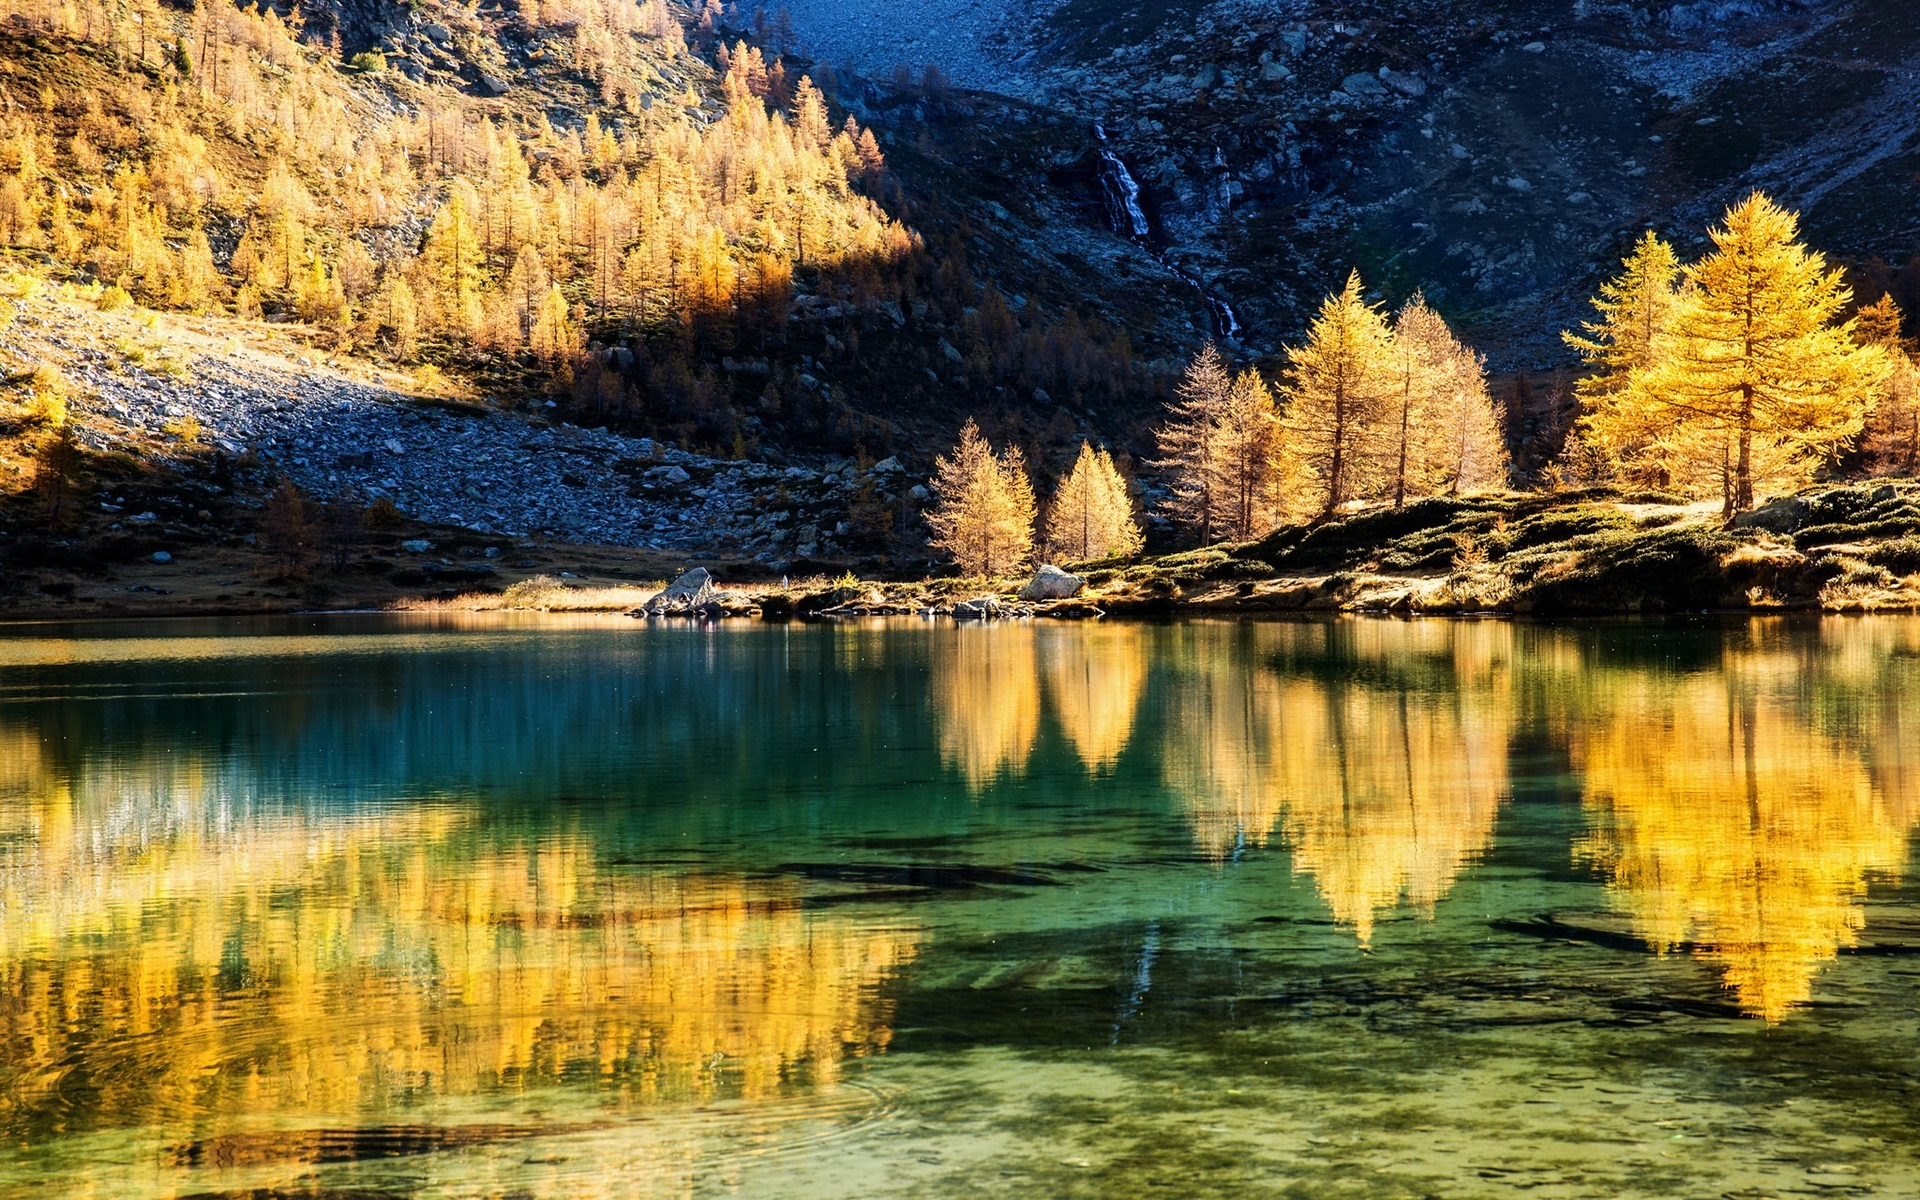 Mountains, trees, lake, water reflection, autumn, sunset